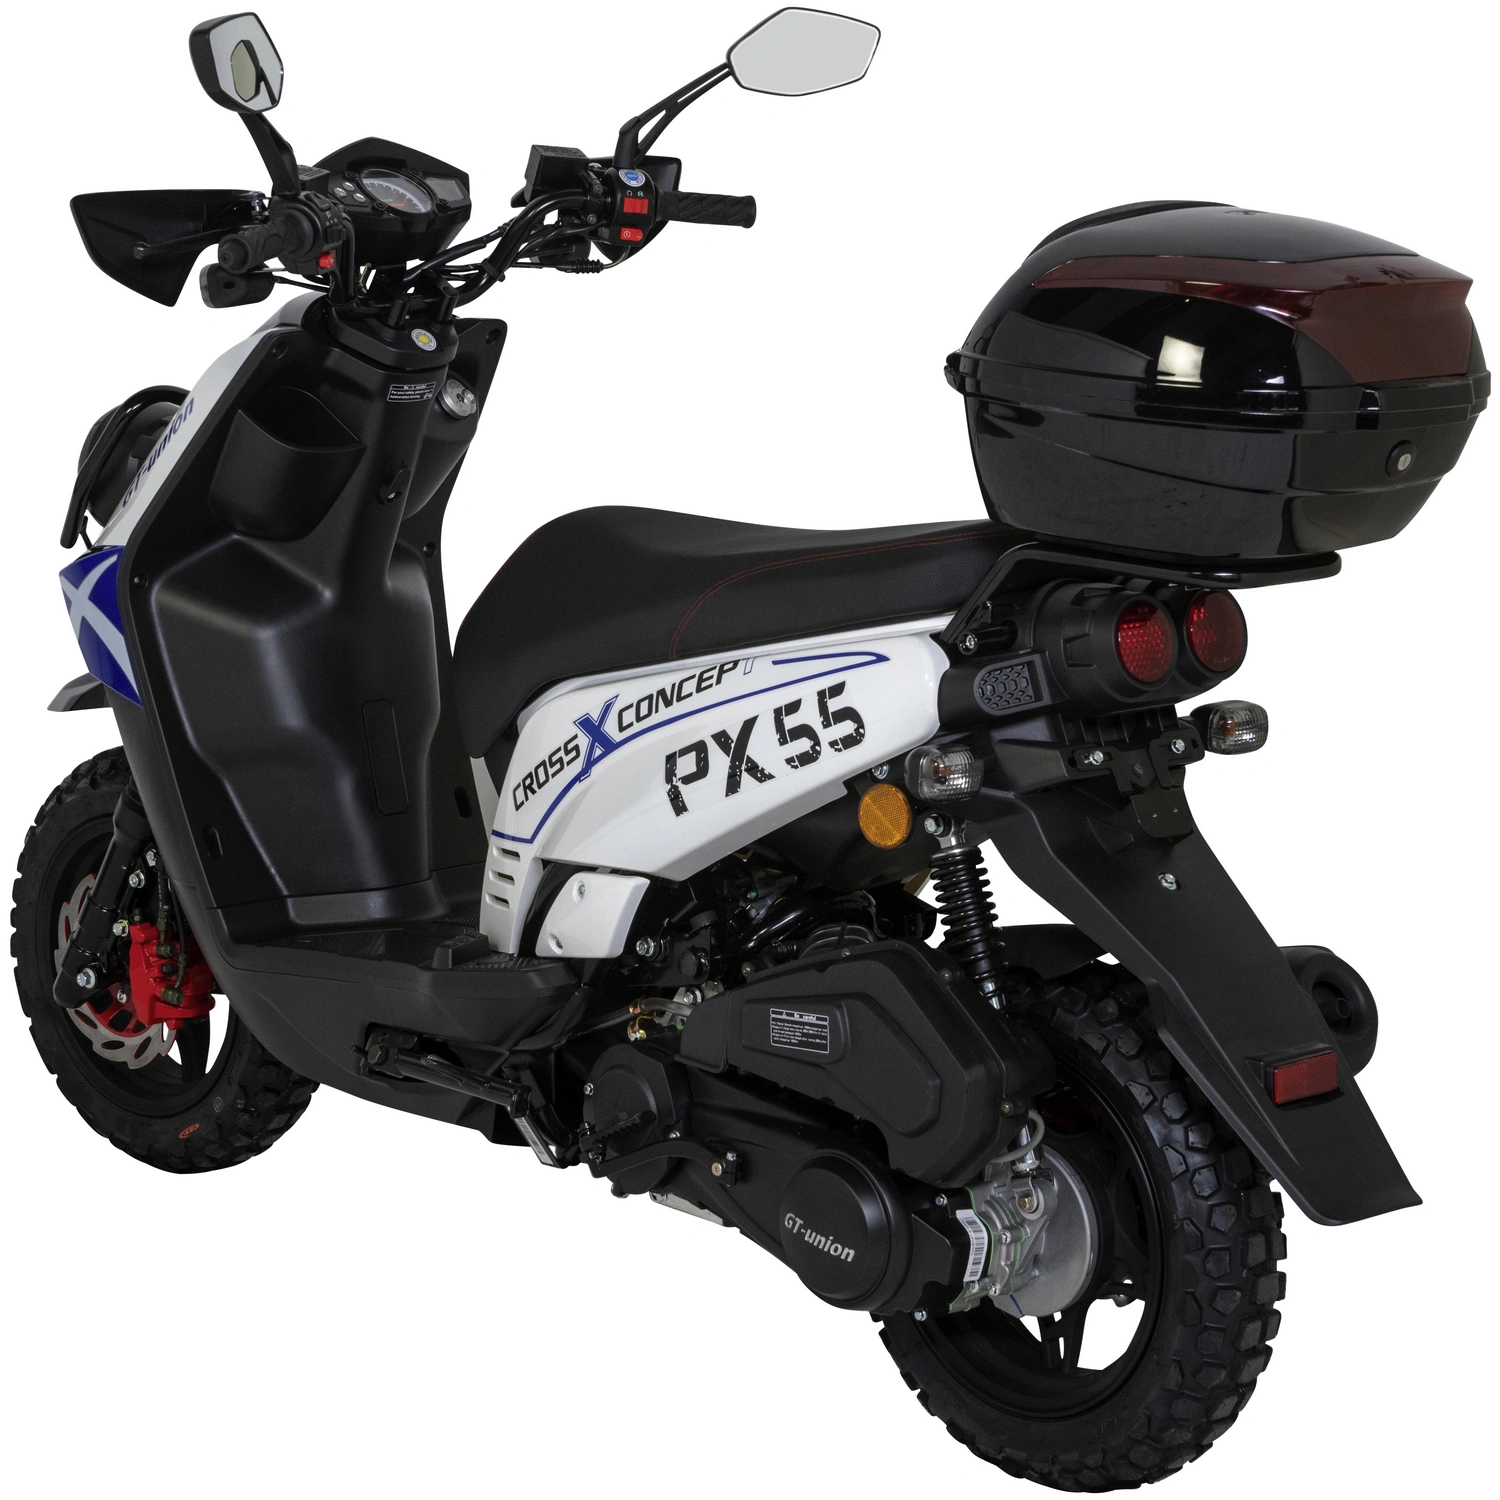 GT UNION Motorroller »PX 55 Cross-Concept«, 50 cm³, 45 km/h, Euro 5